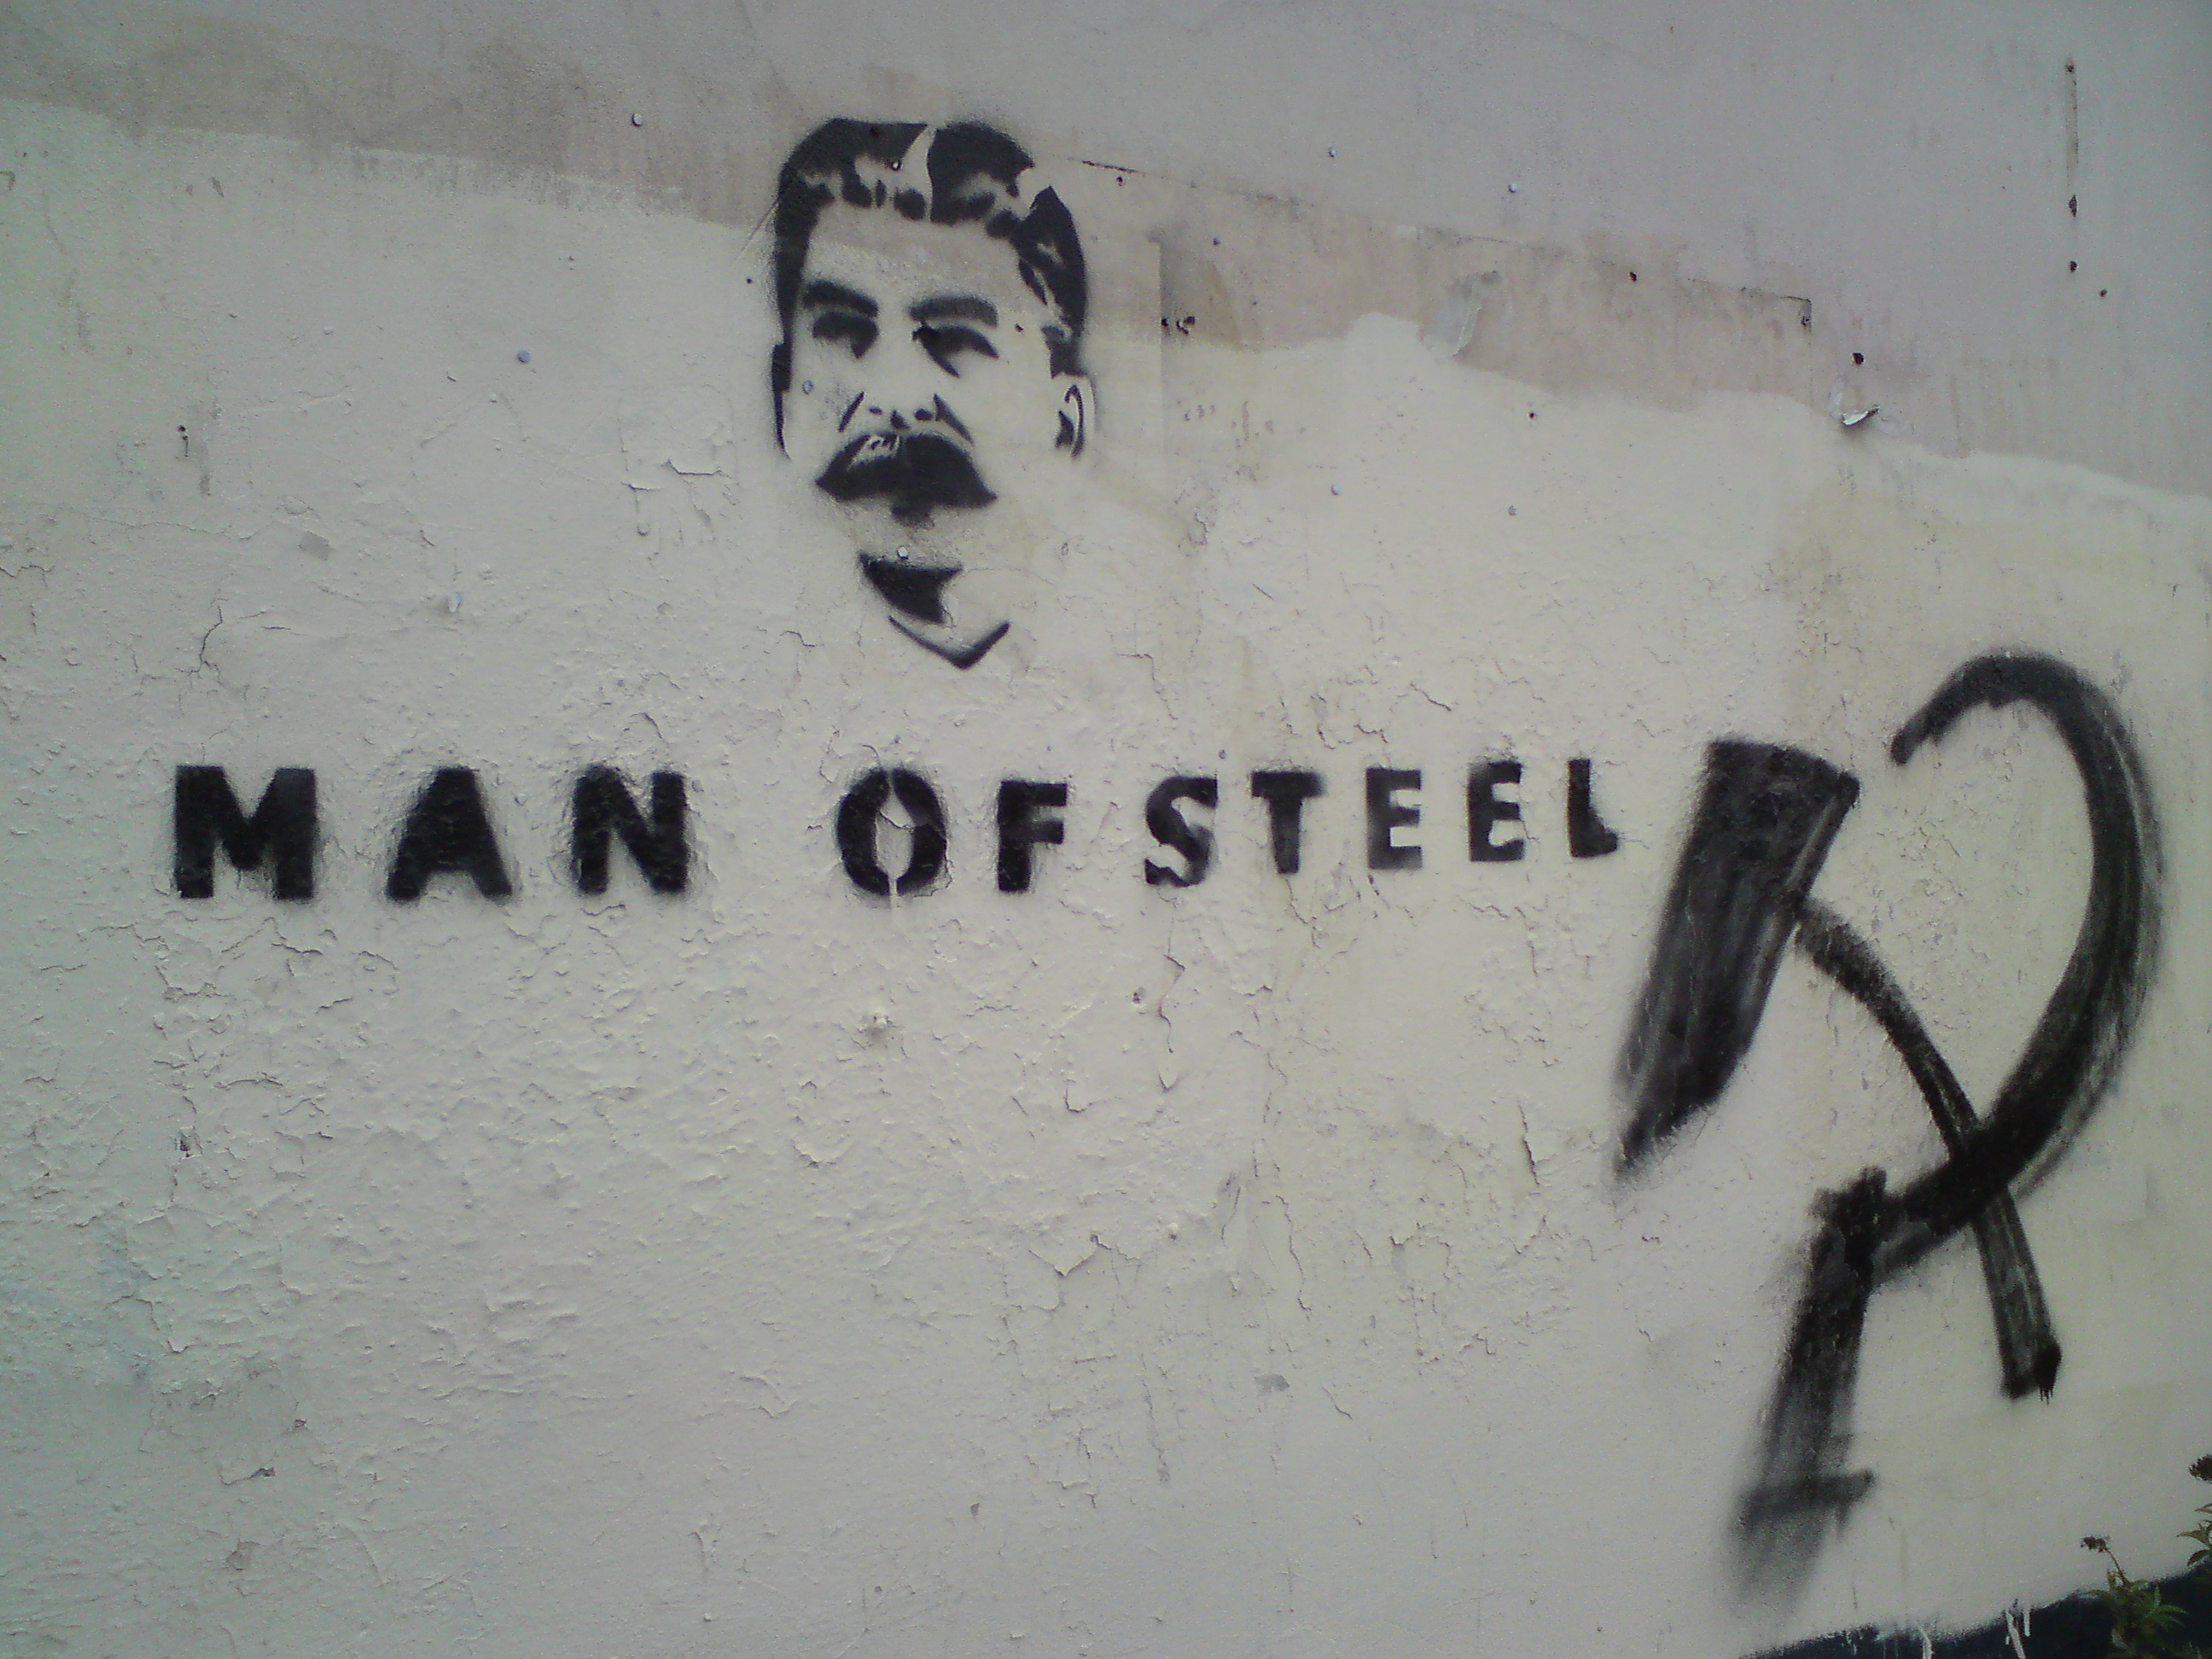 man of steel